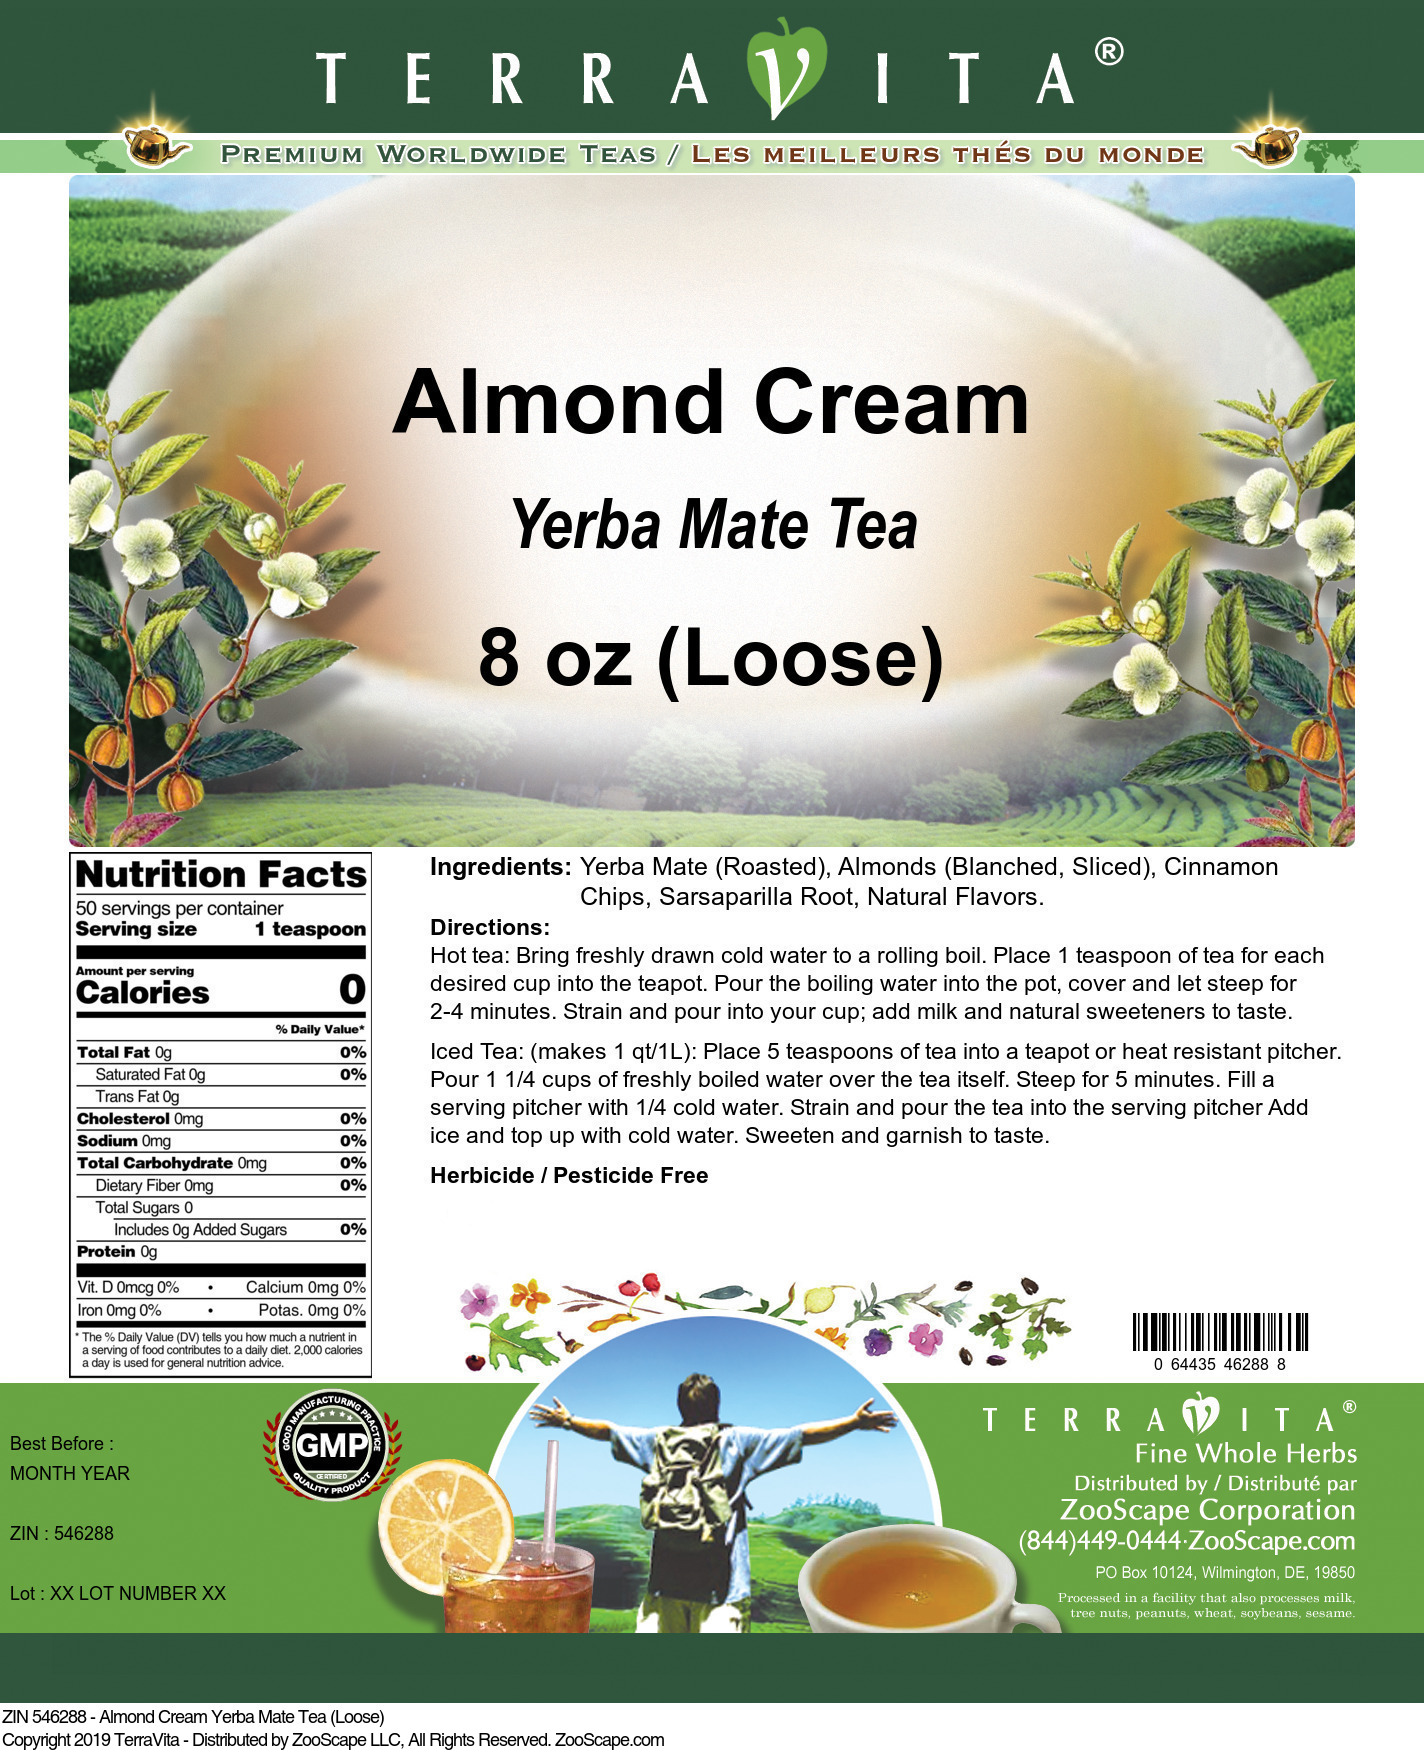 Almond Cream Yerba Mate Tea (Loose) - Label